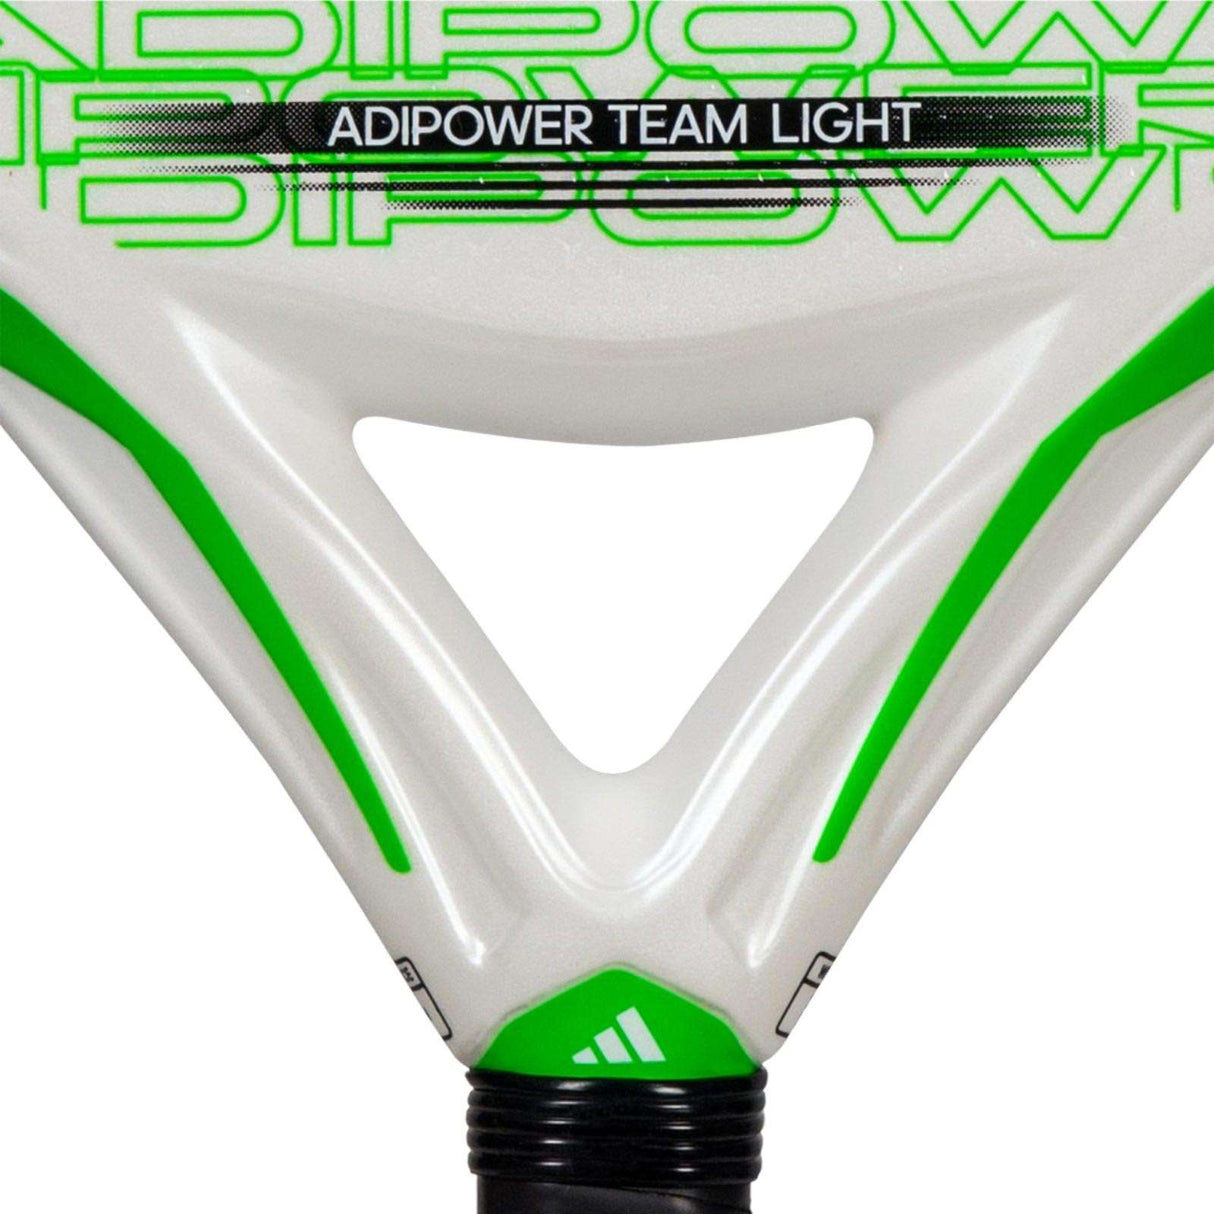 adidas AdipowerTeam Light 3.3 Padel Racket